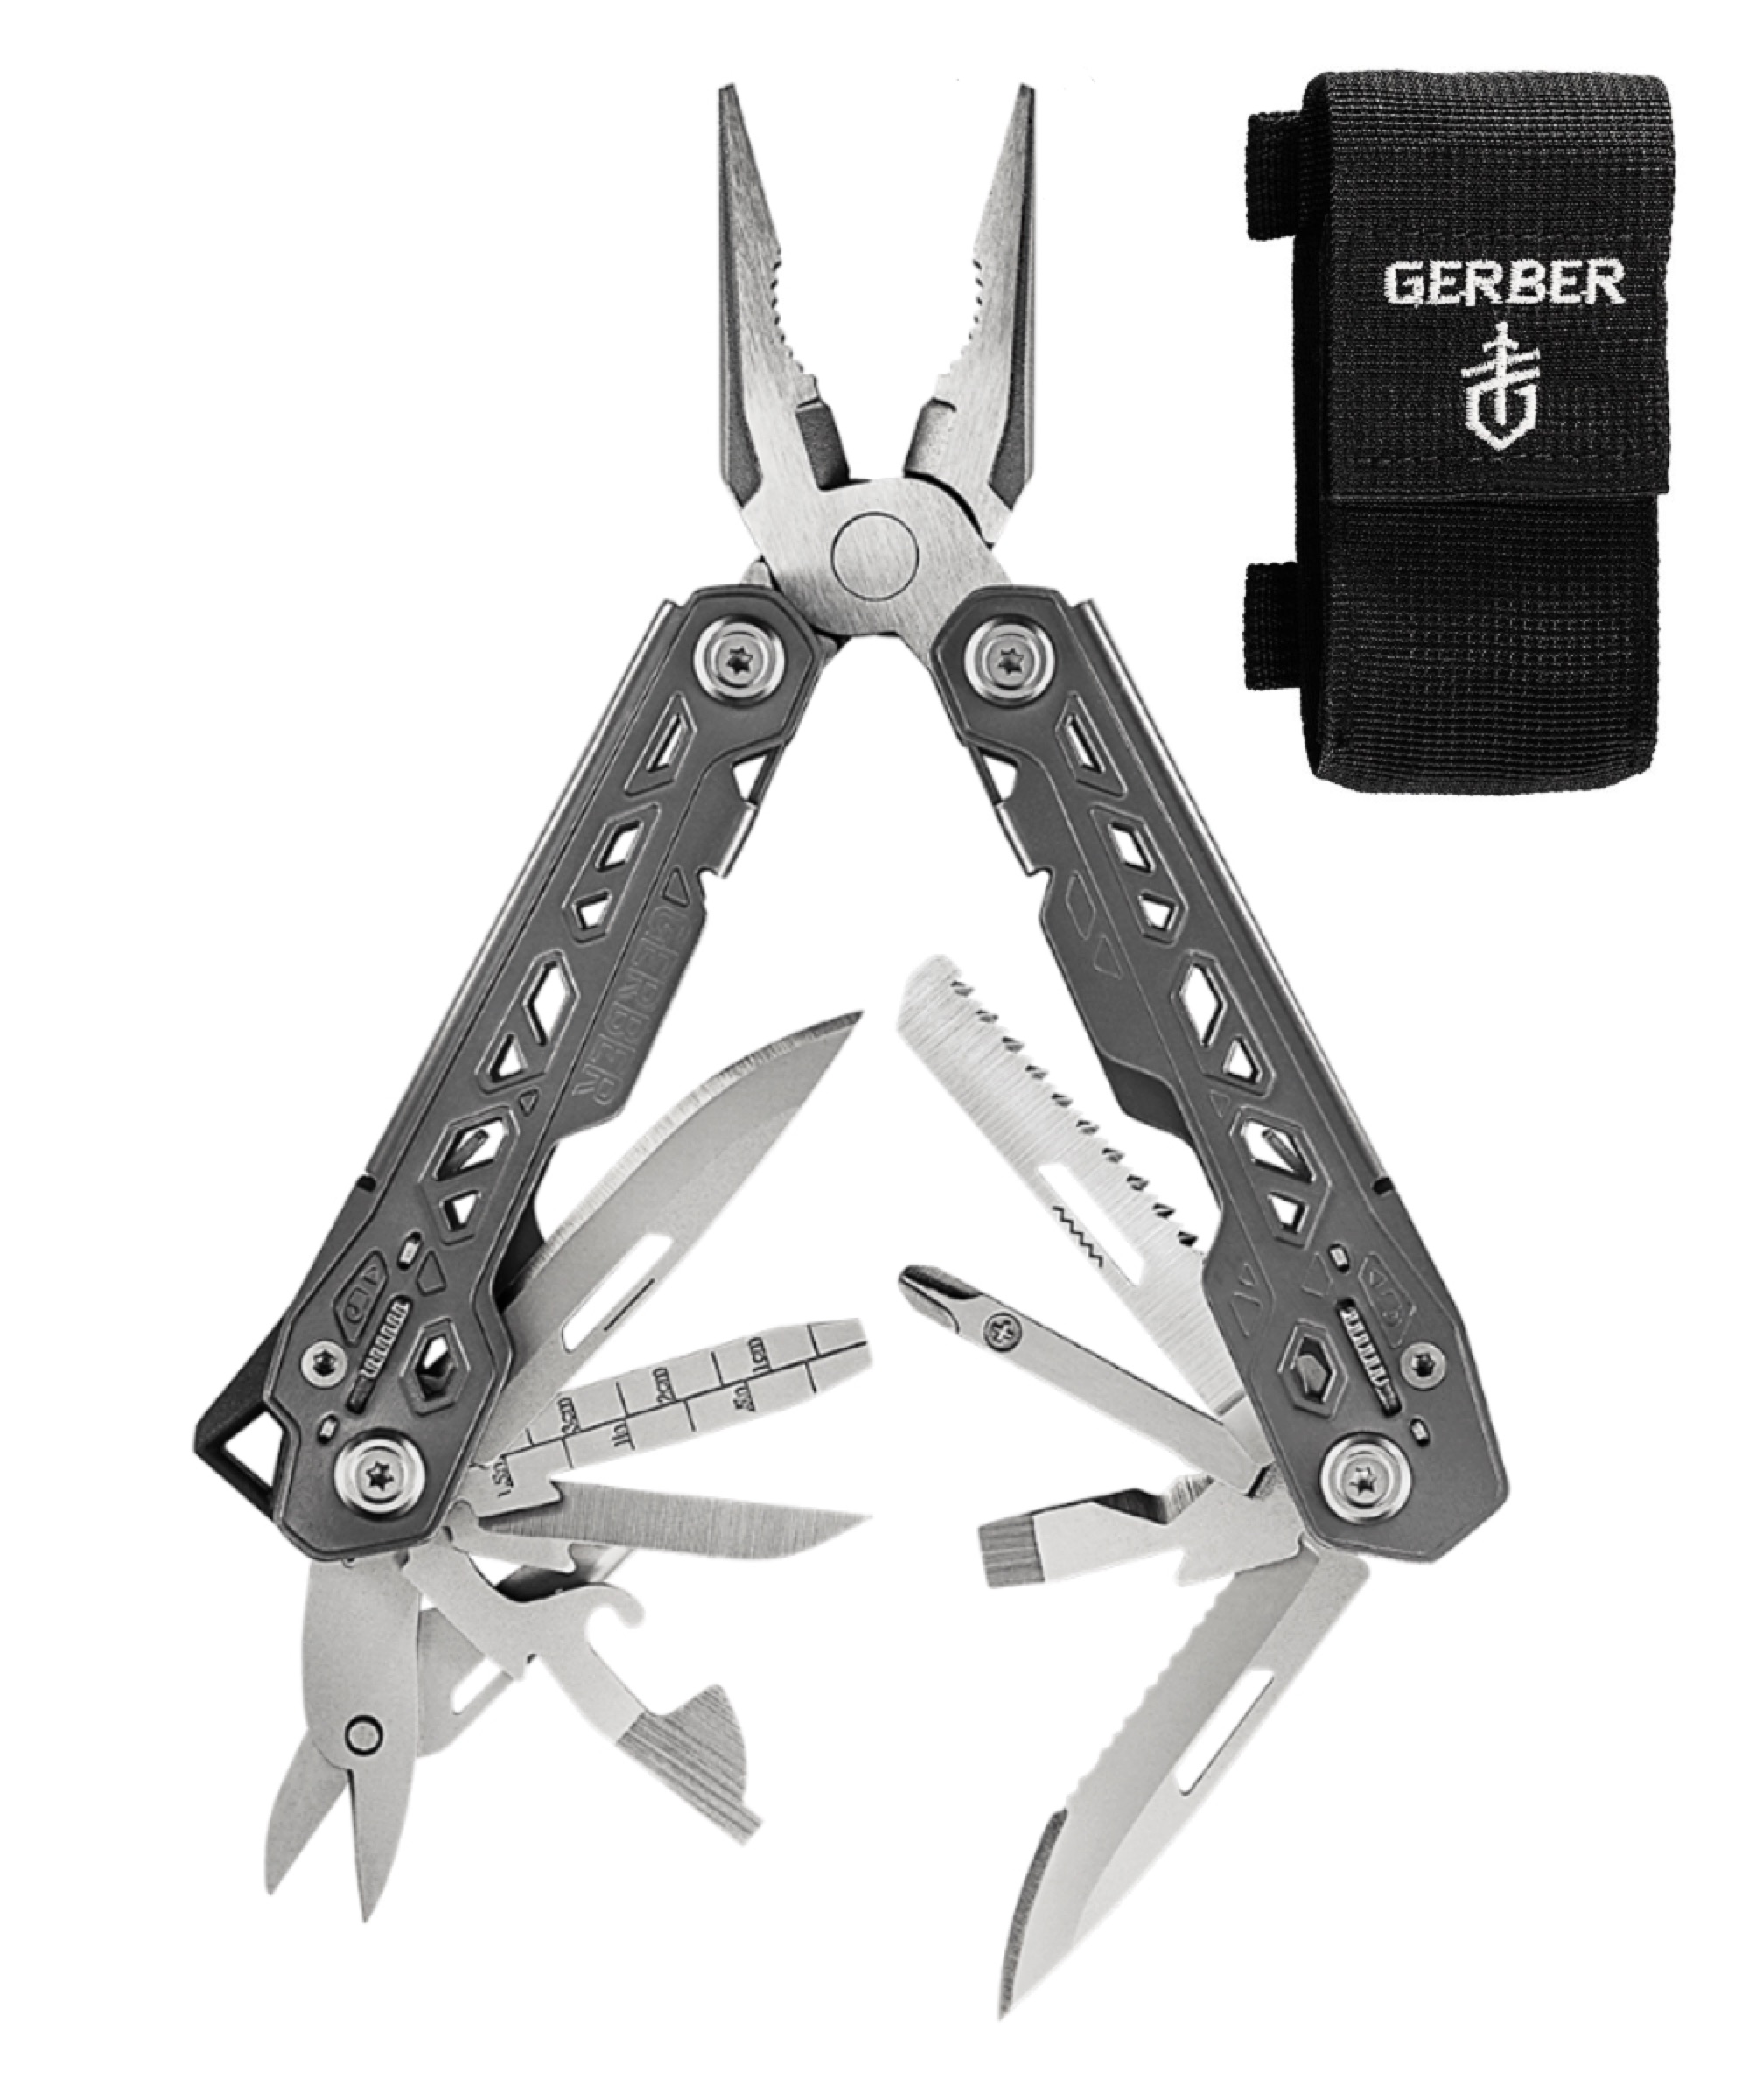 gerber multi tool